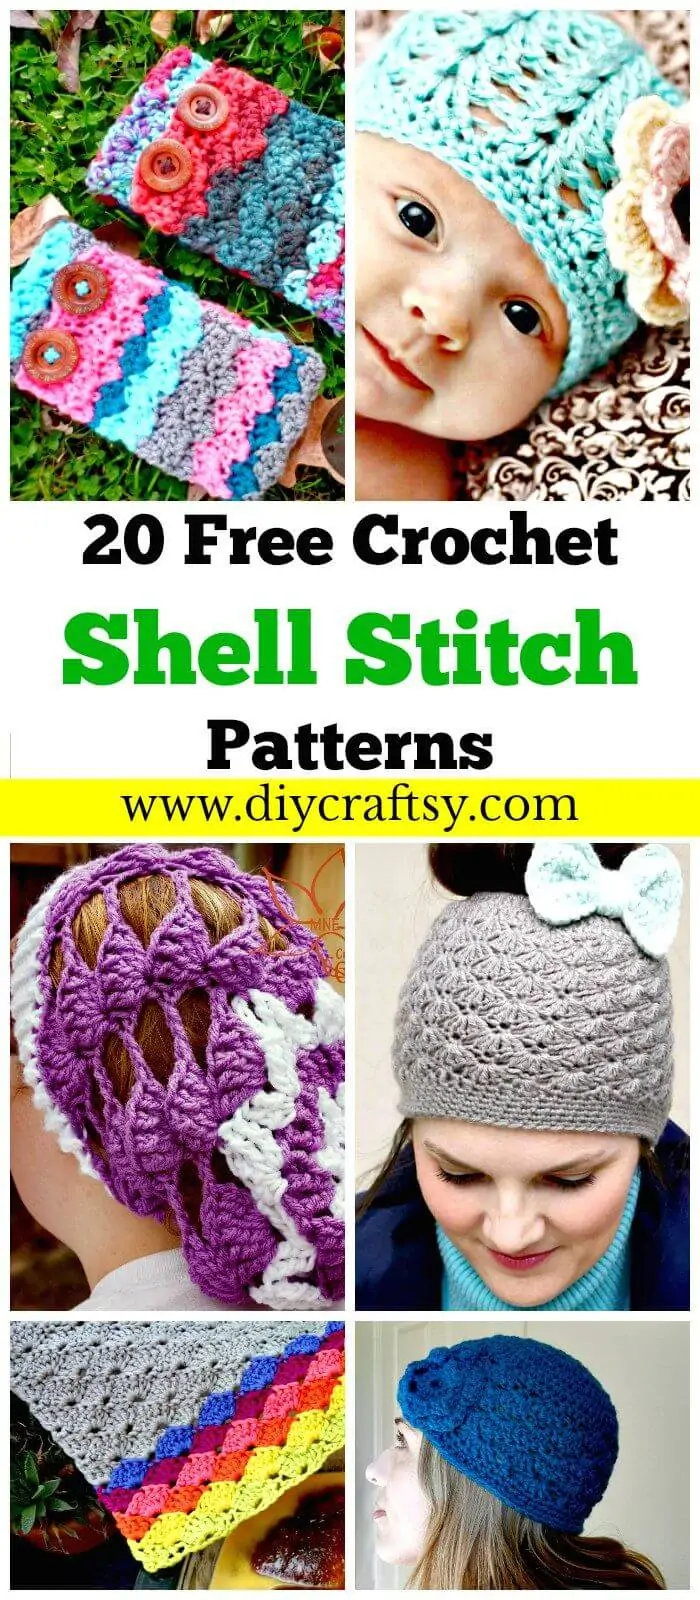 Free-Crochet-Shell-Stitch-Patterns-Free-Crochet-Patterns-DIY-Crafts